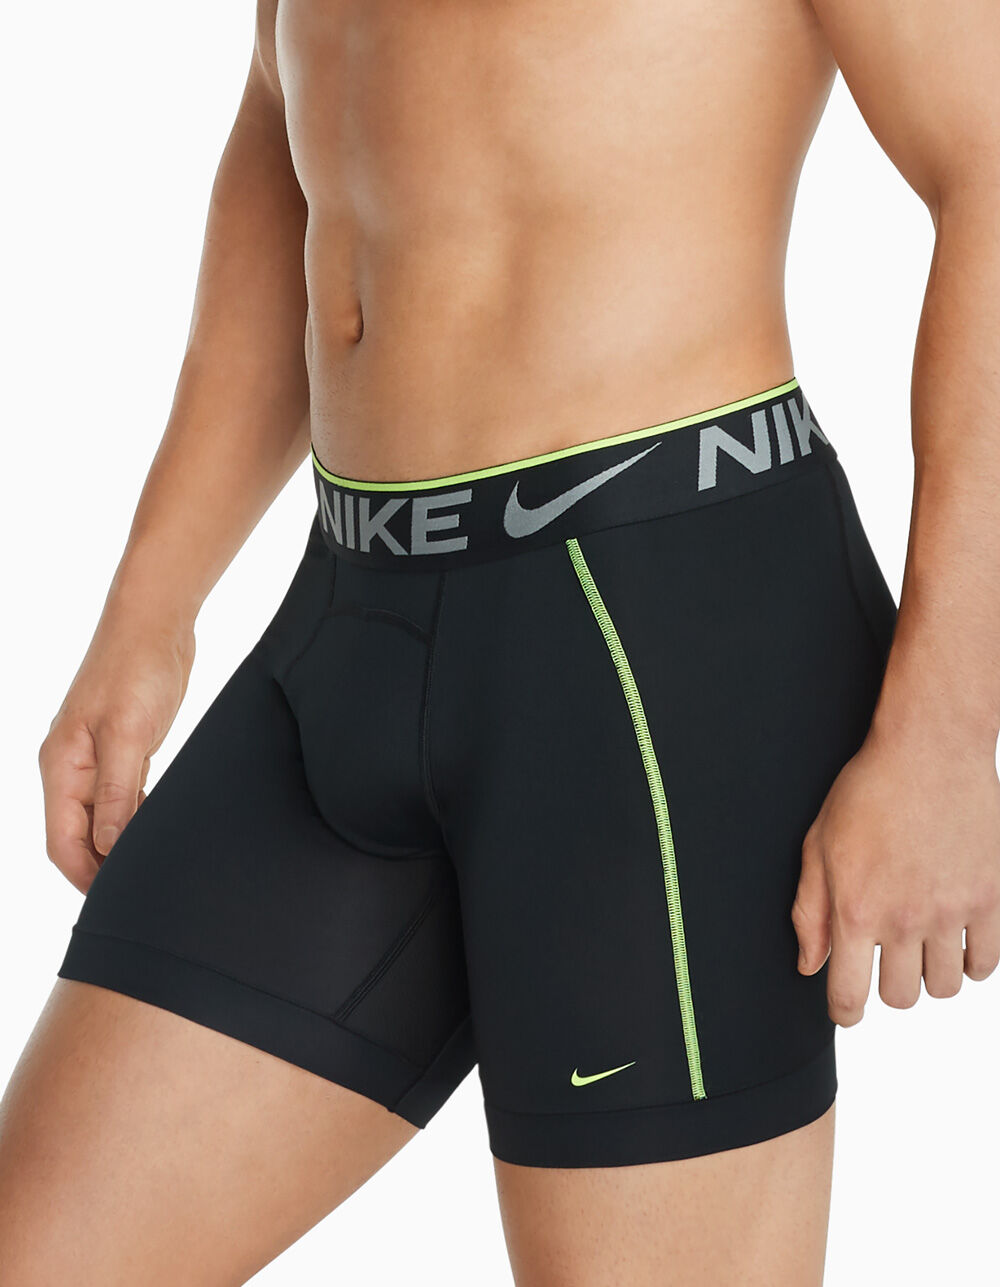 Nike 2 Pack Boxer Shorts Mens